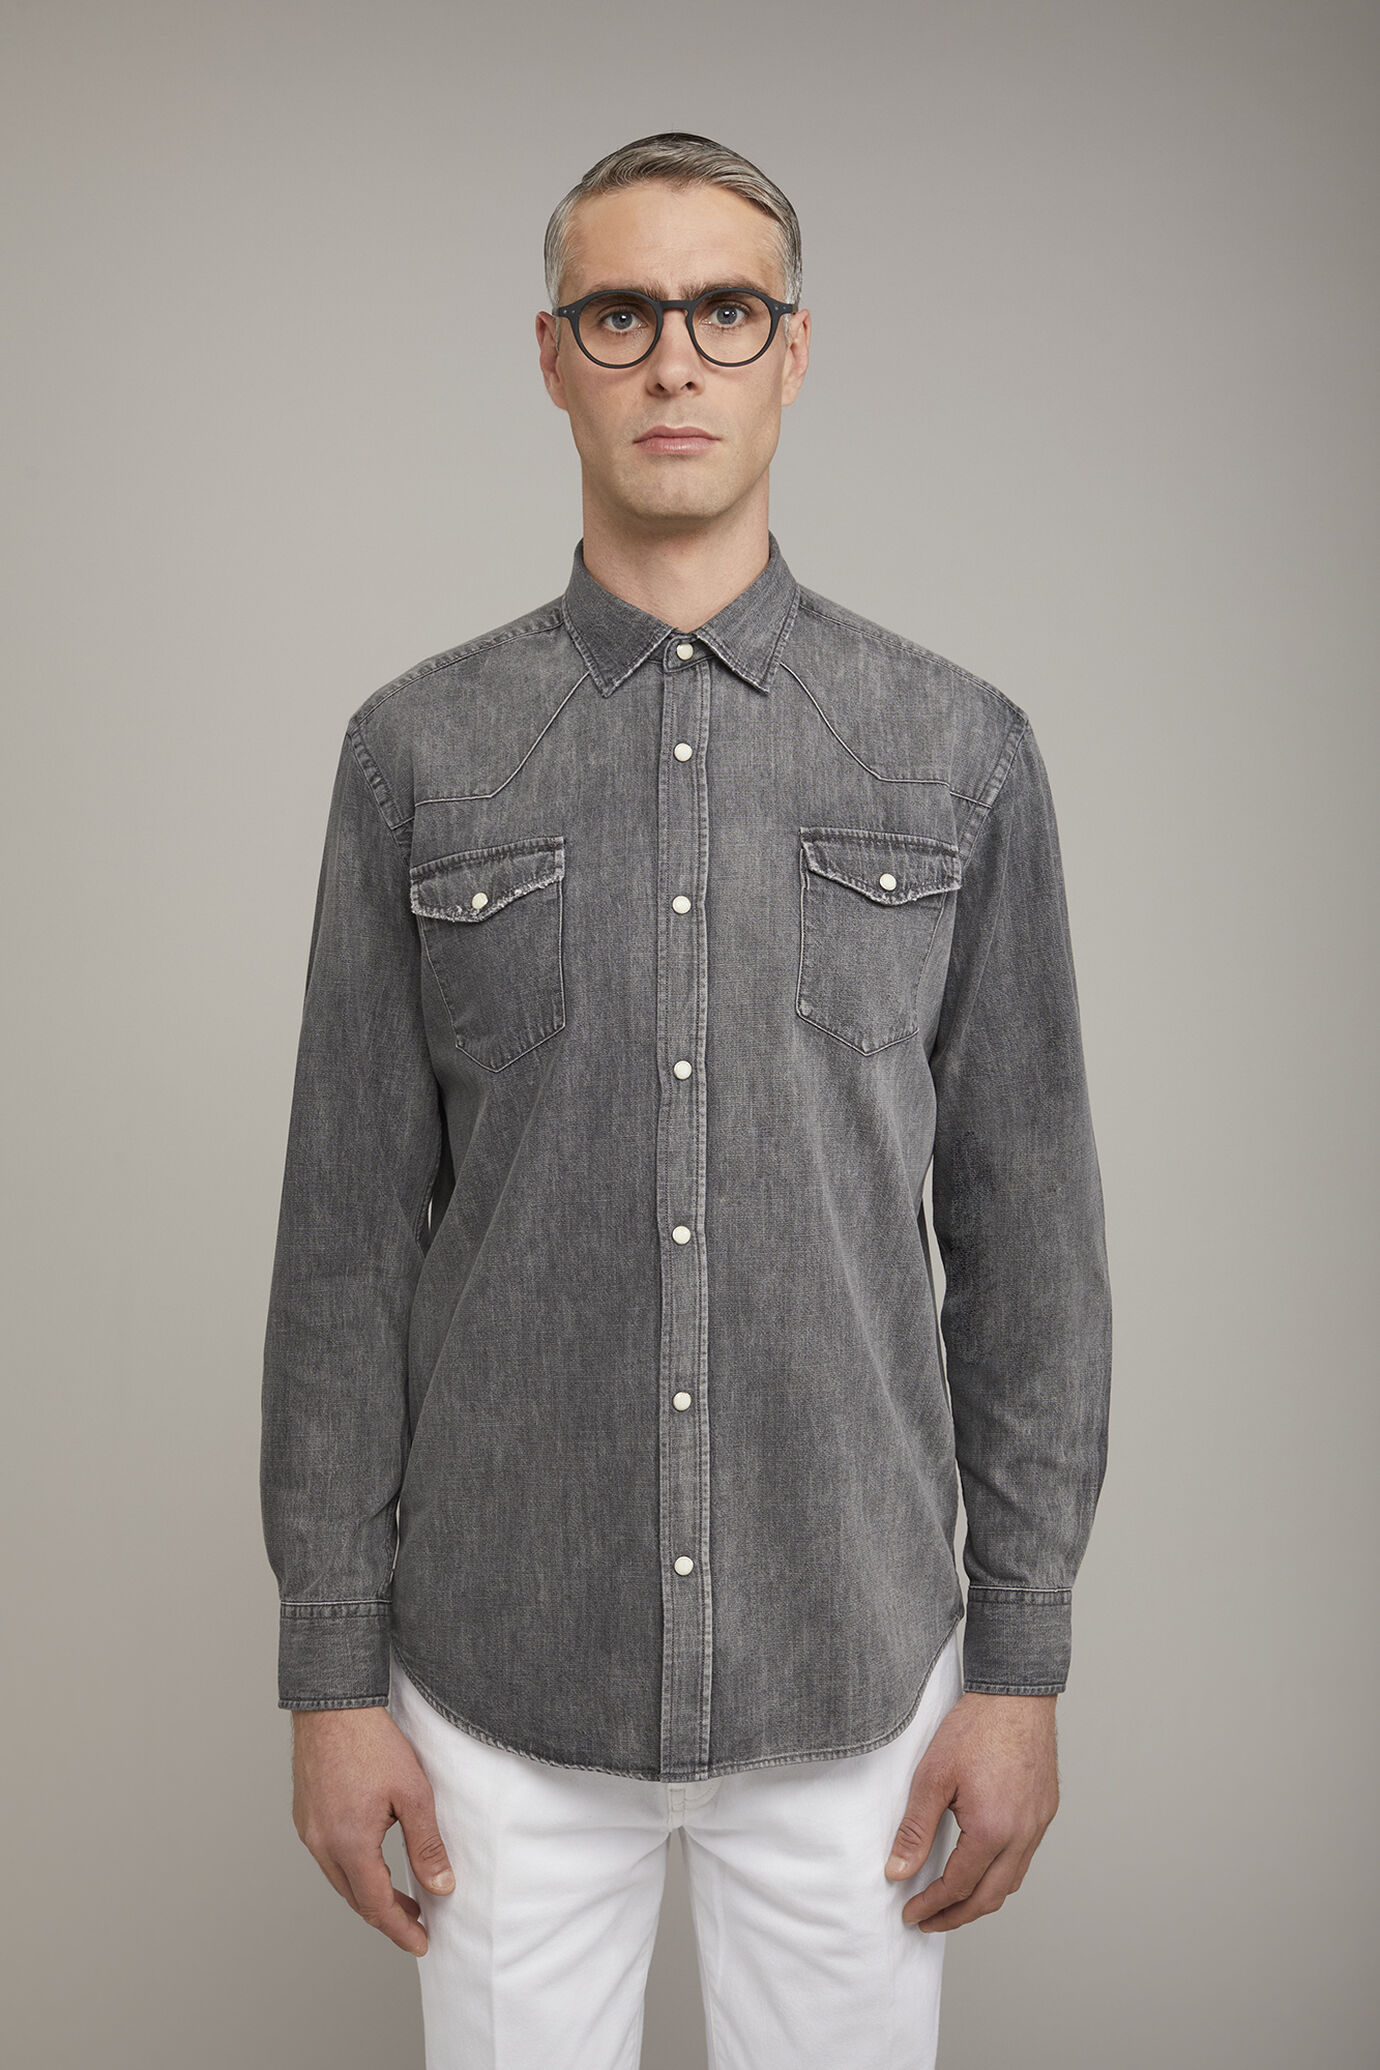 Camicia casual uomo collo classico 100% cotone tessuto denim comfort fit image number 2